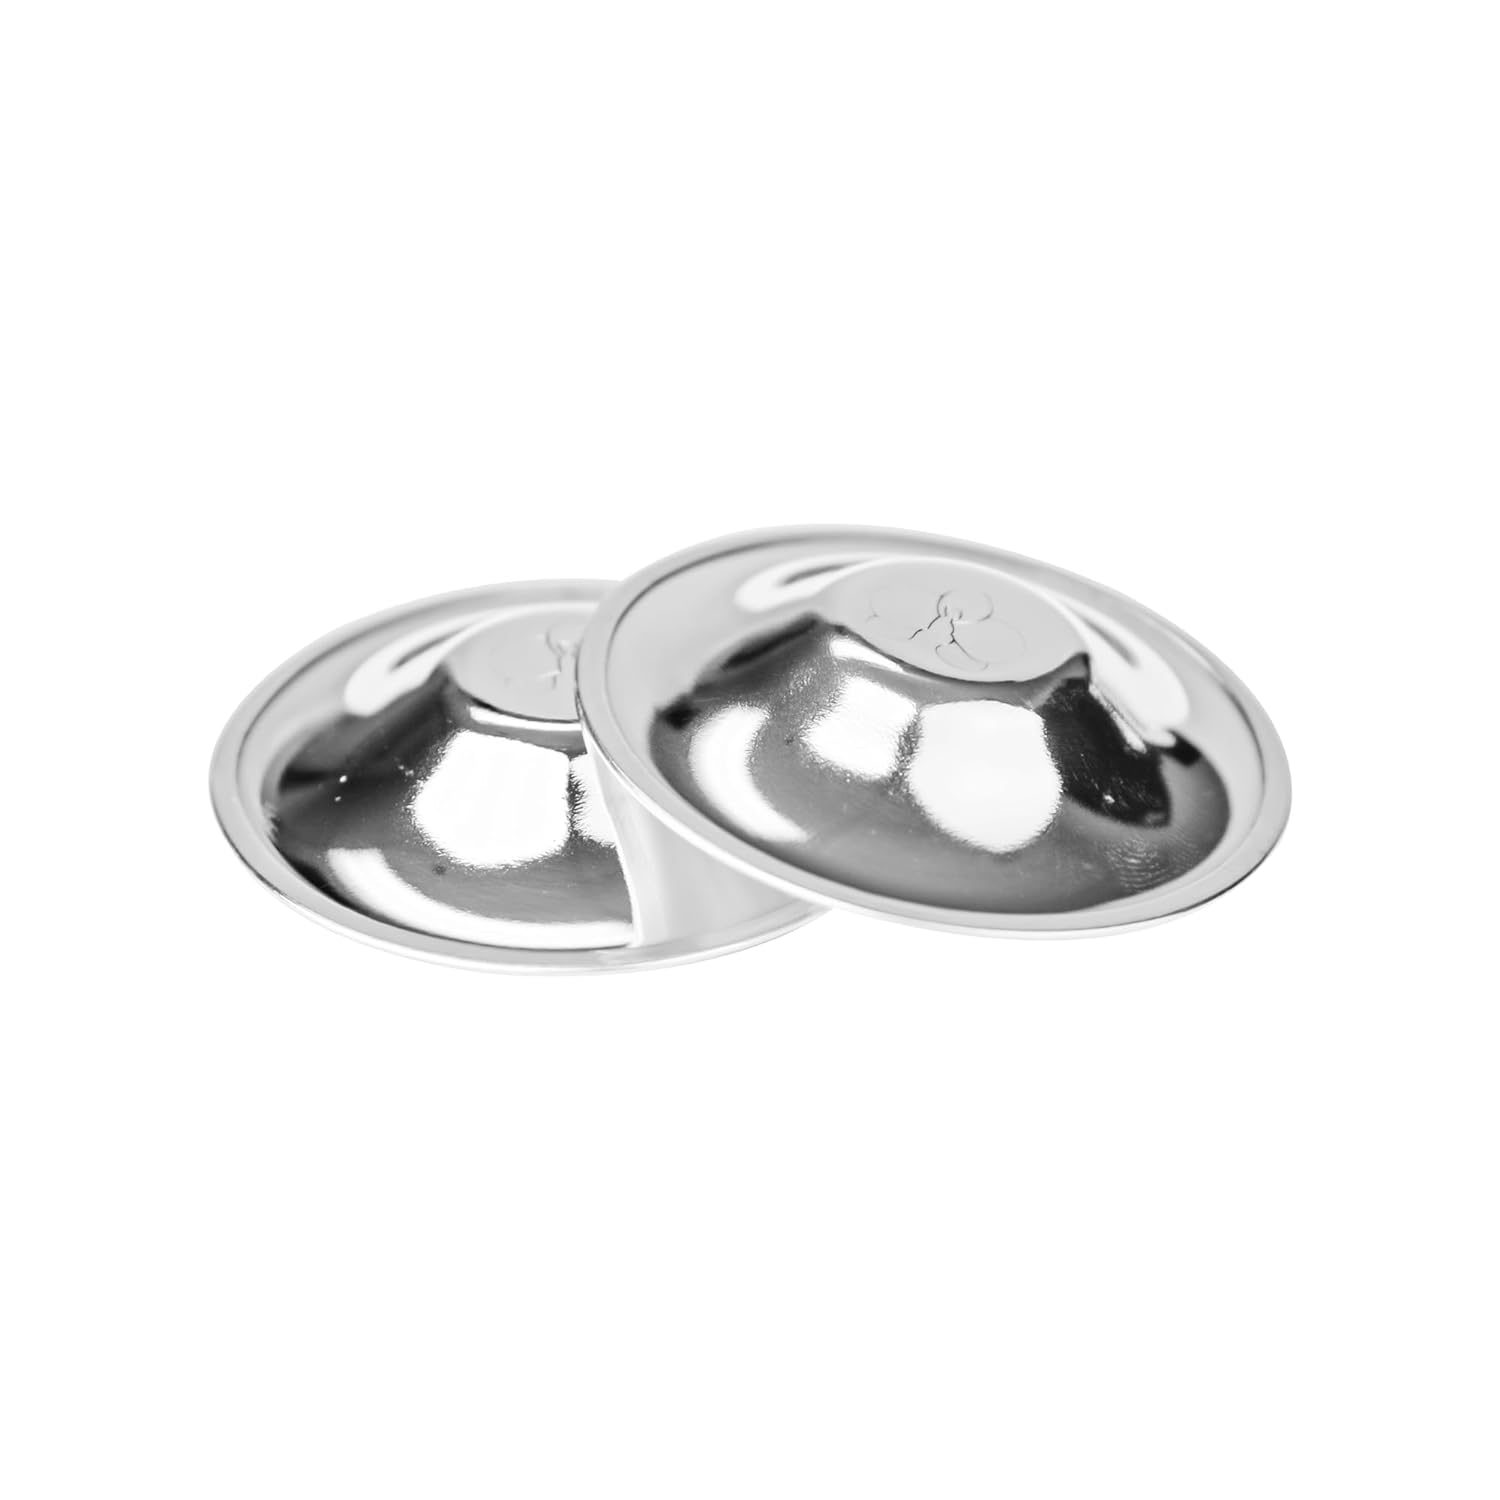 Zomee Silver Nursing Cups - Nipple Shields for Nursing Newborn Standard